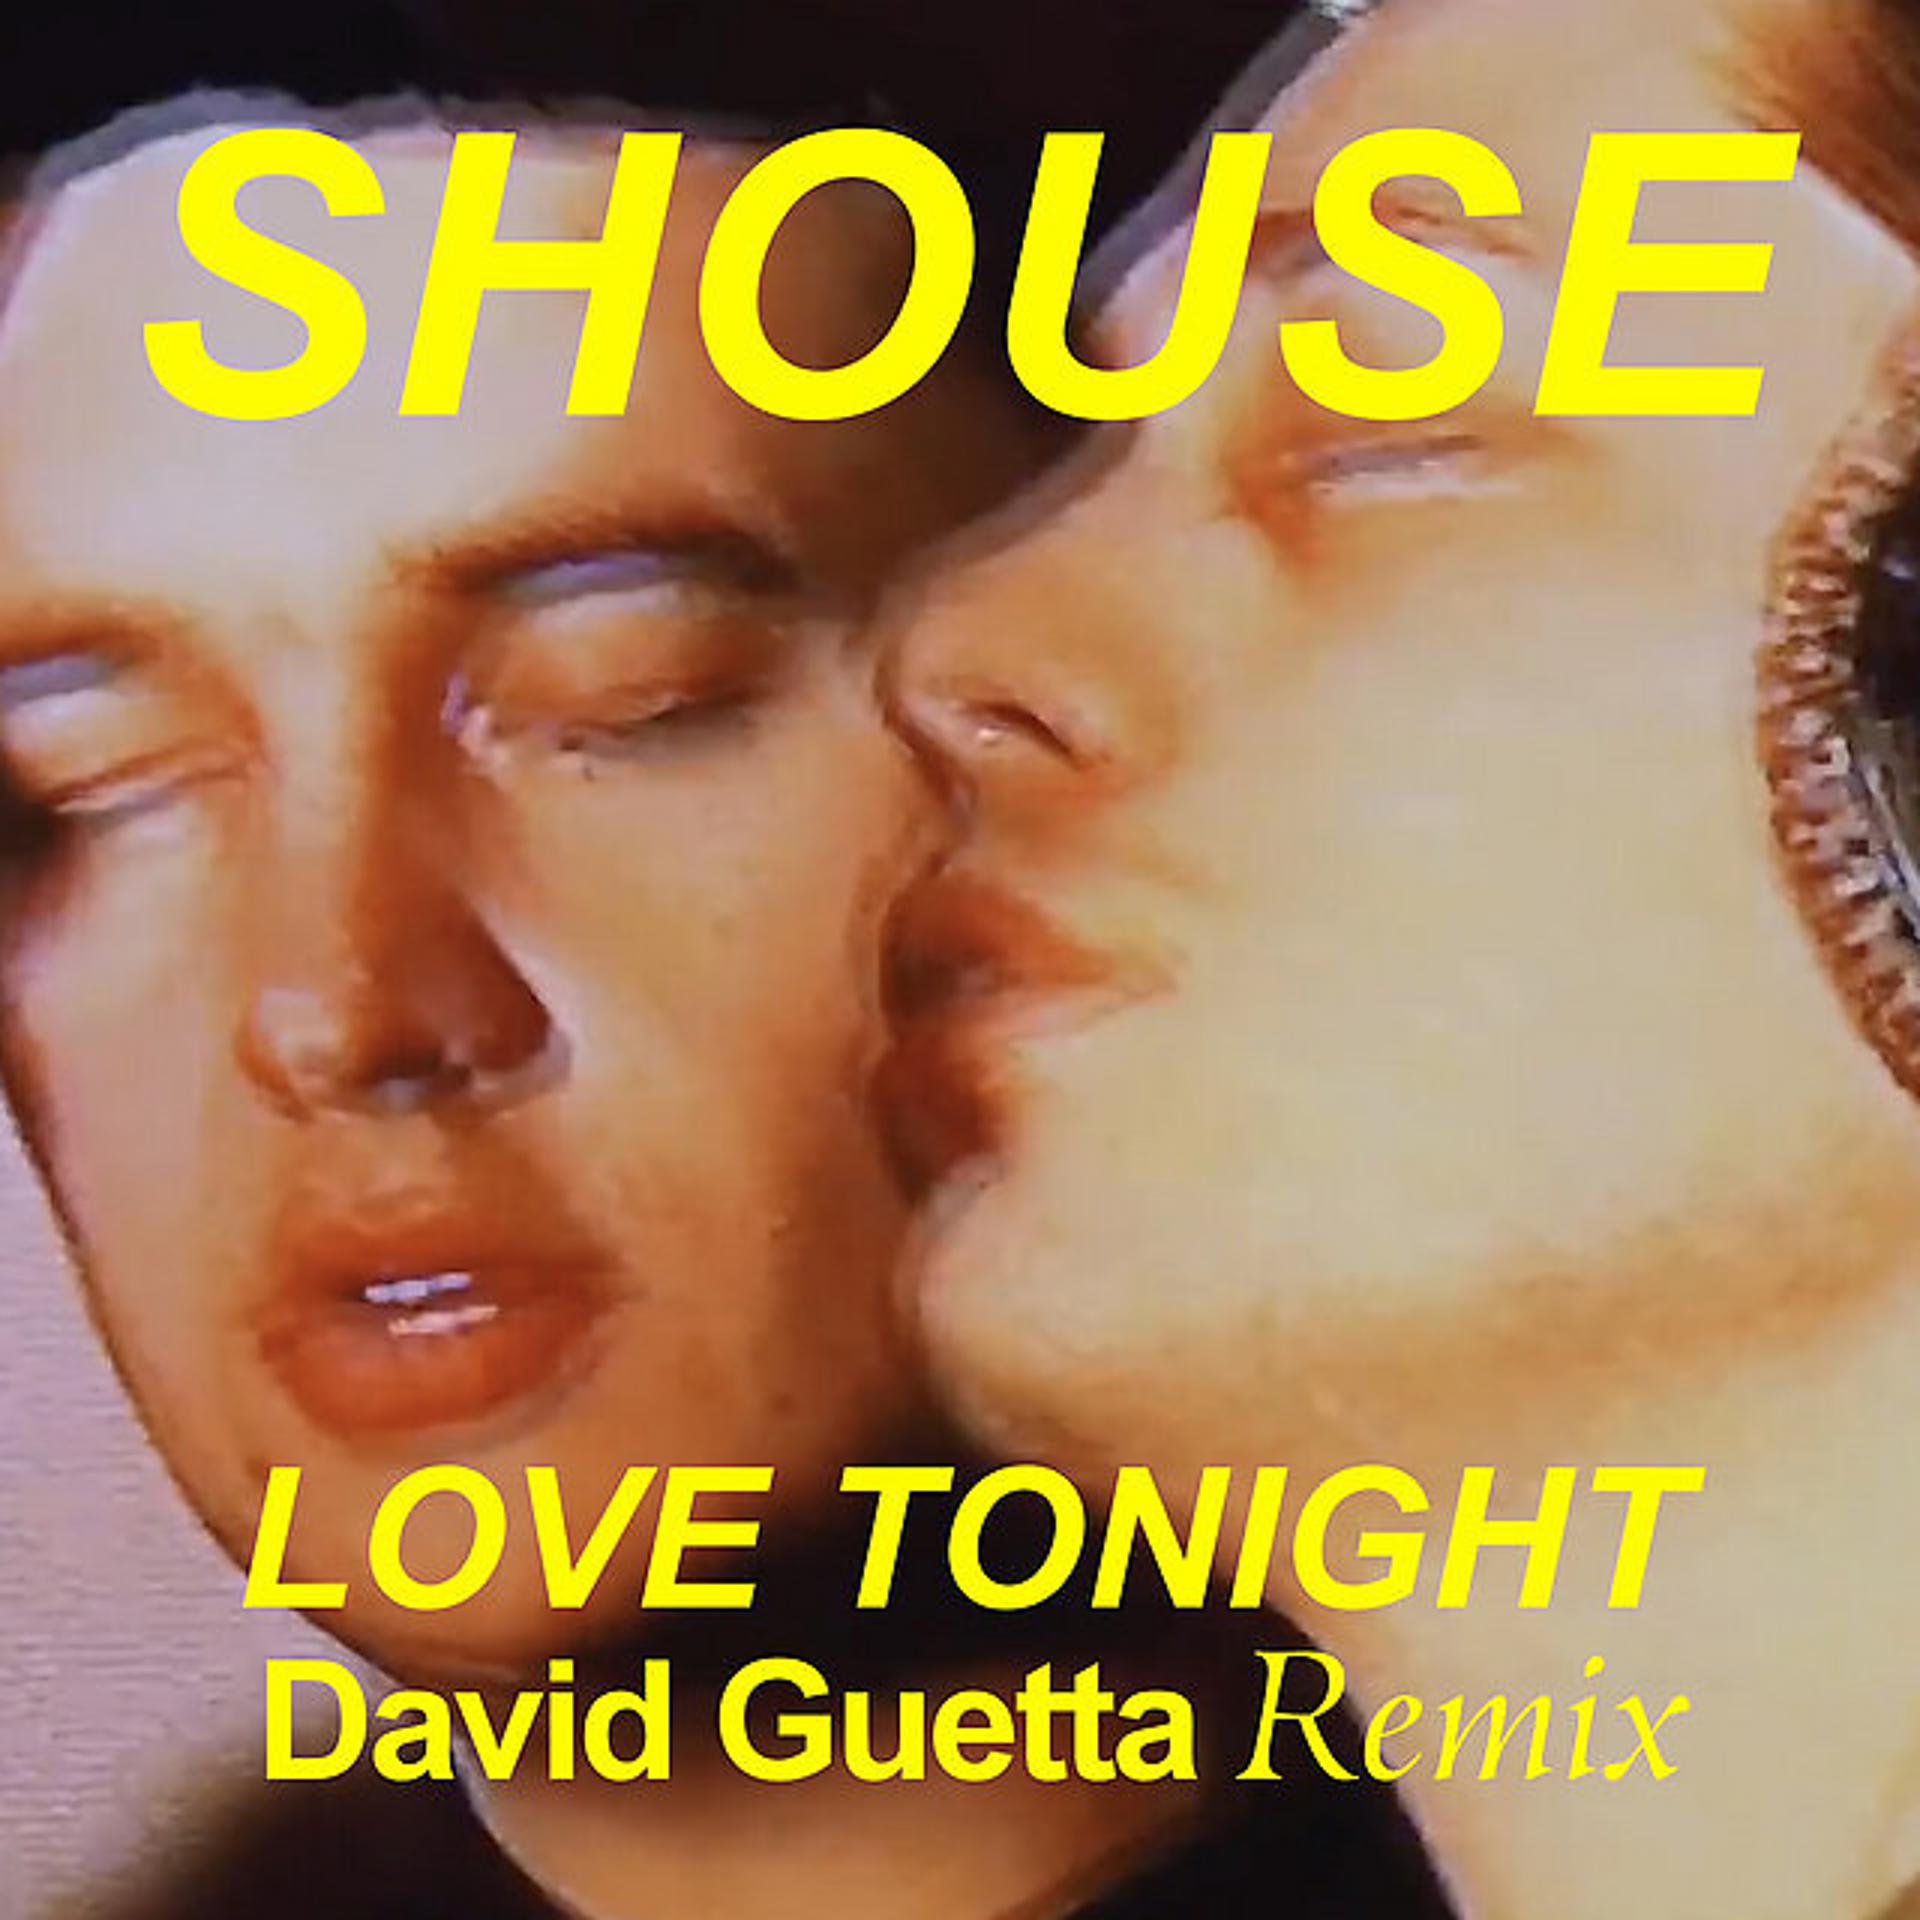 Love Tonight. Shouse - Love Tonight (David Guetta Remix Edit). Shouse - Love Tonight (David Guetta. Shouse David Guetta Remix.